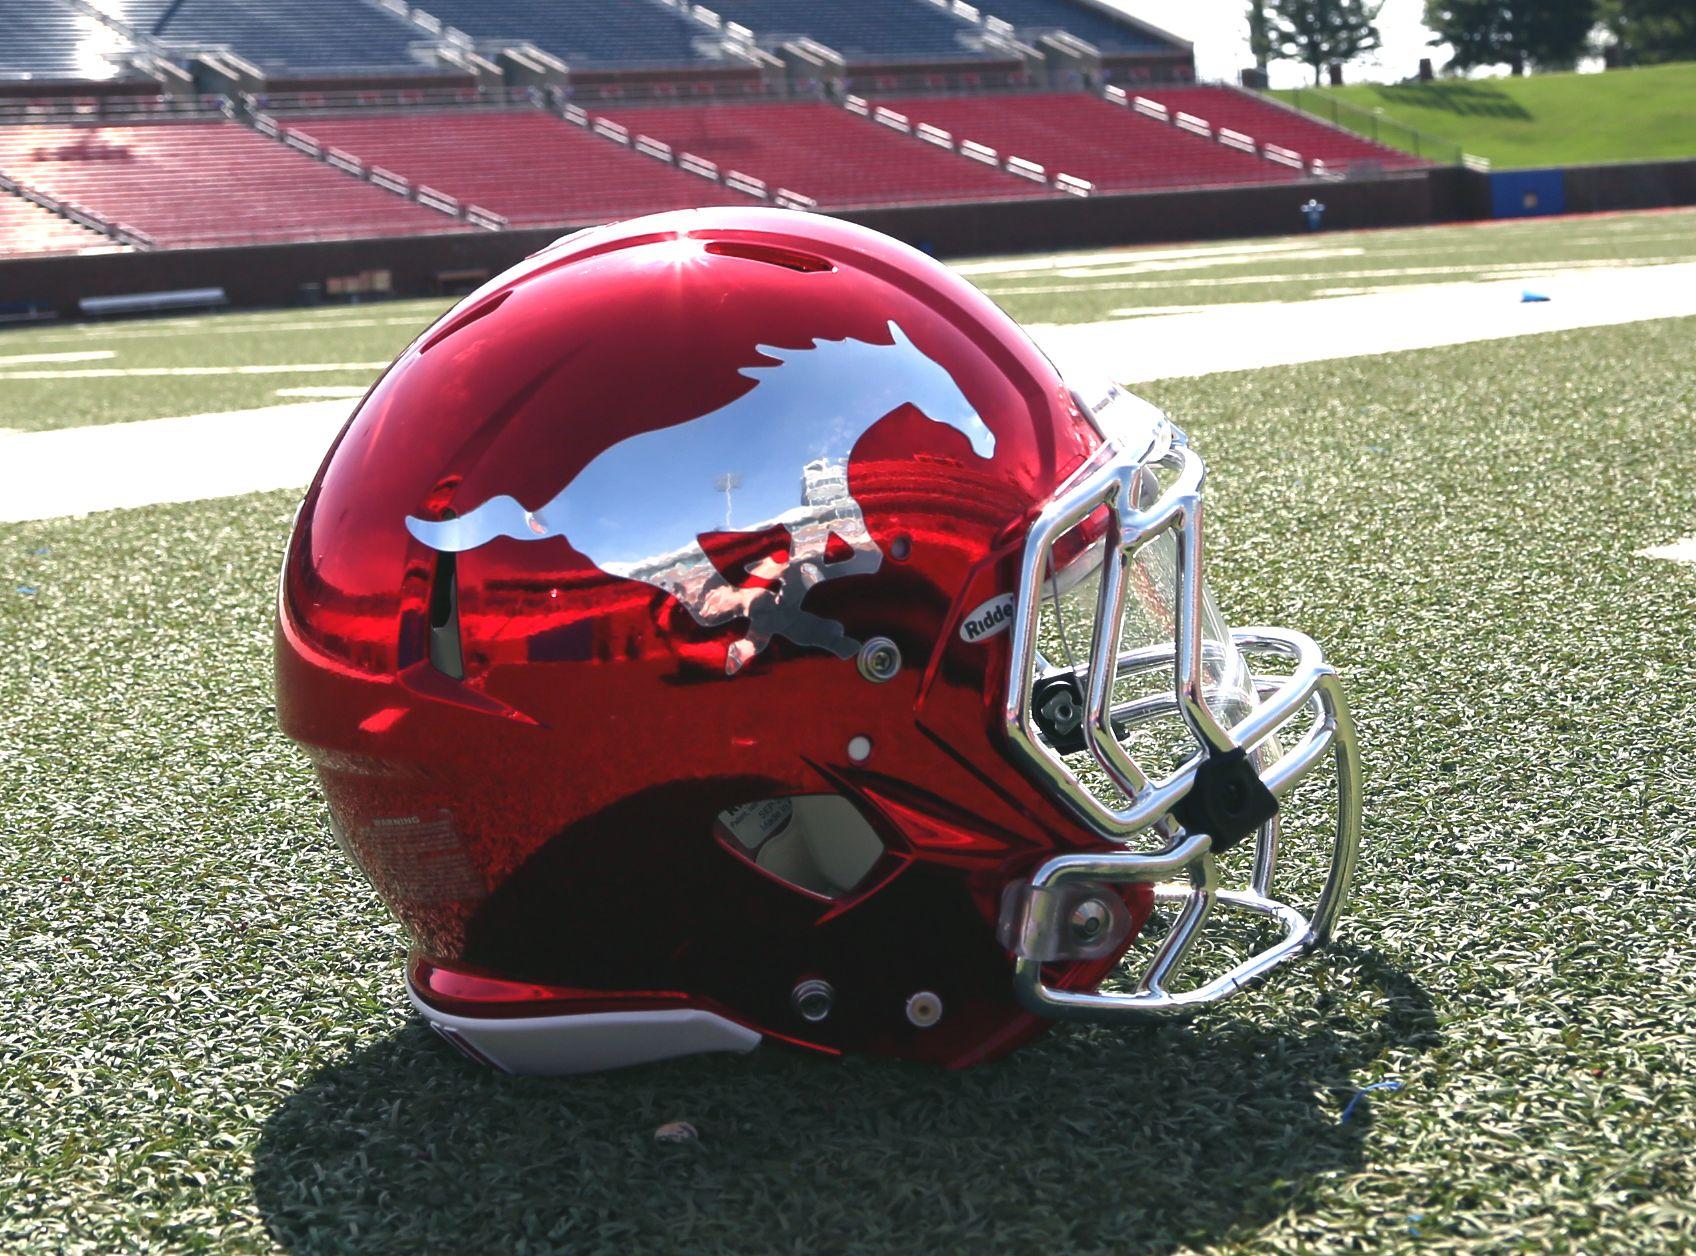 Mustang Football Helmet Logo - SMU to open its football season against Baylor on Sept. 4 - SMU